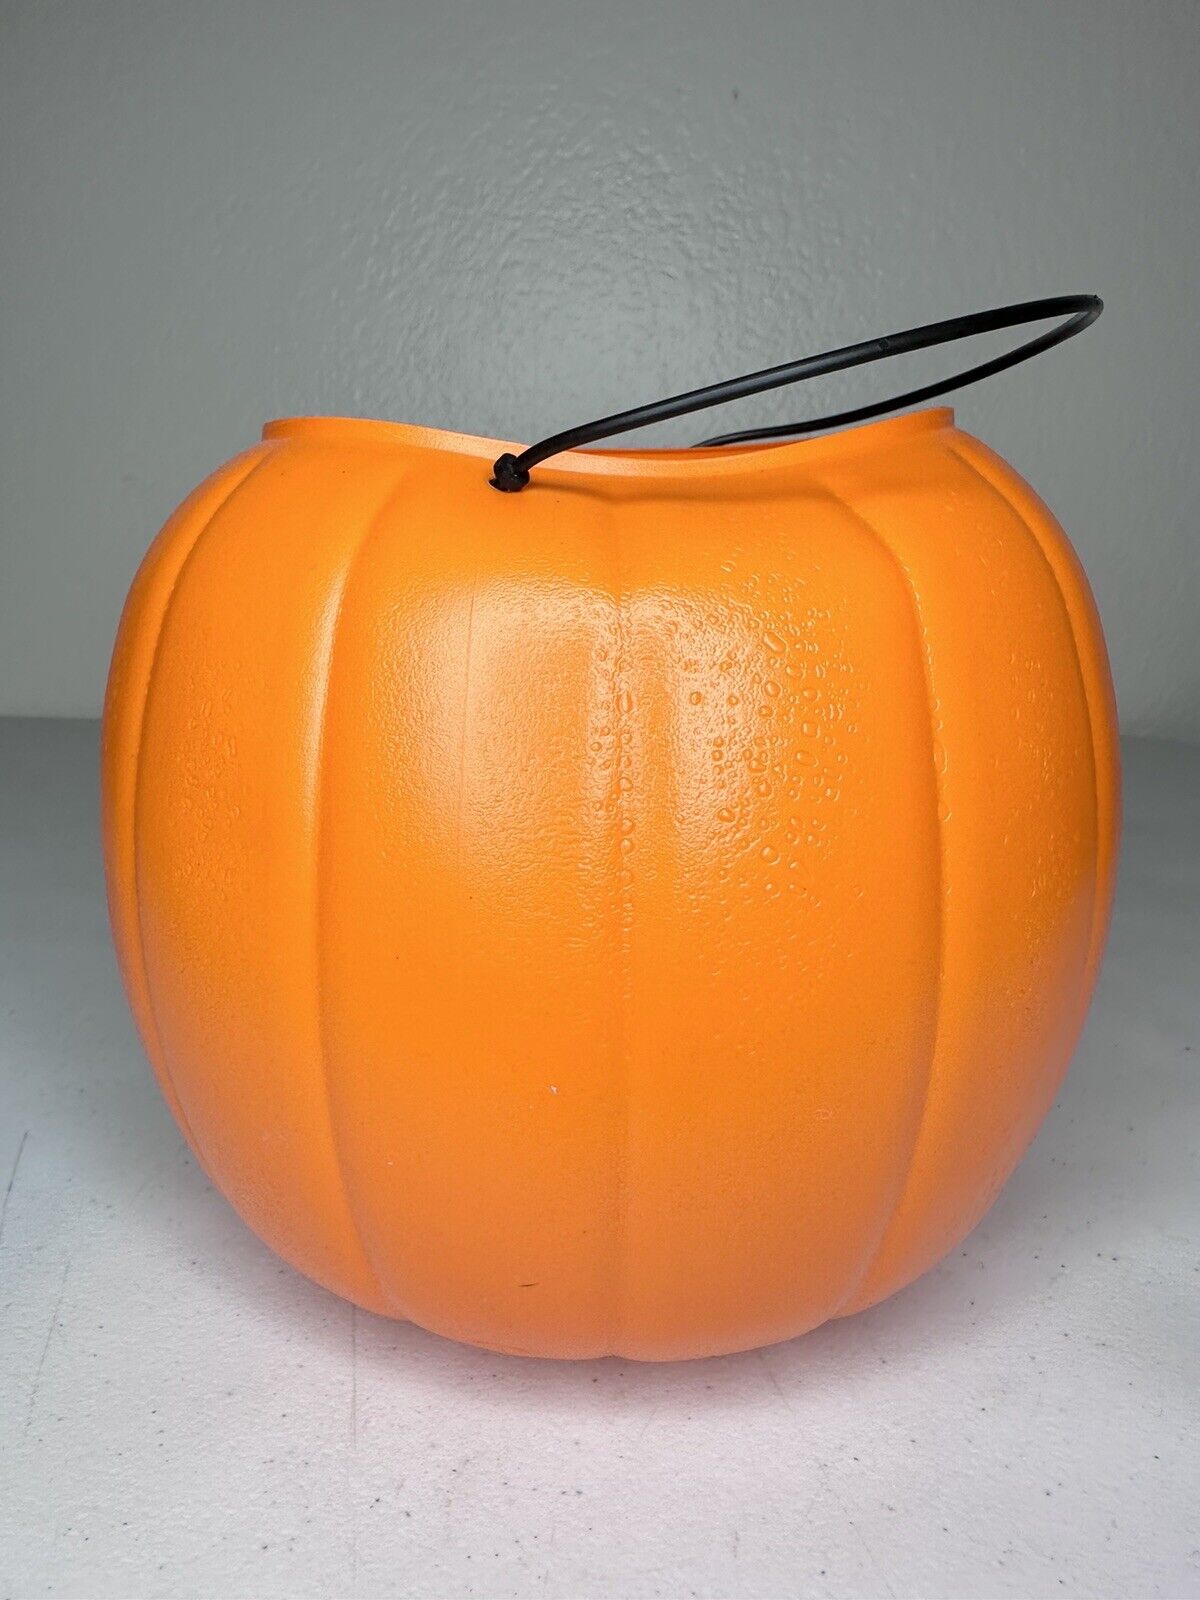 Vintage Classic Smiling Pumpkin Lantern - USA-Made Halloween Candy Bucket by General Foam Plastics - TreasuTiques